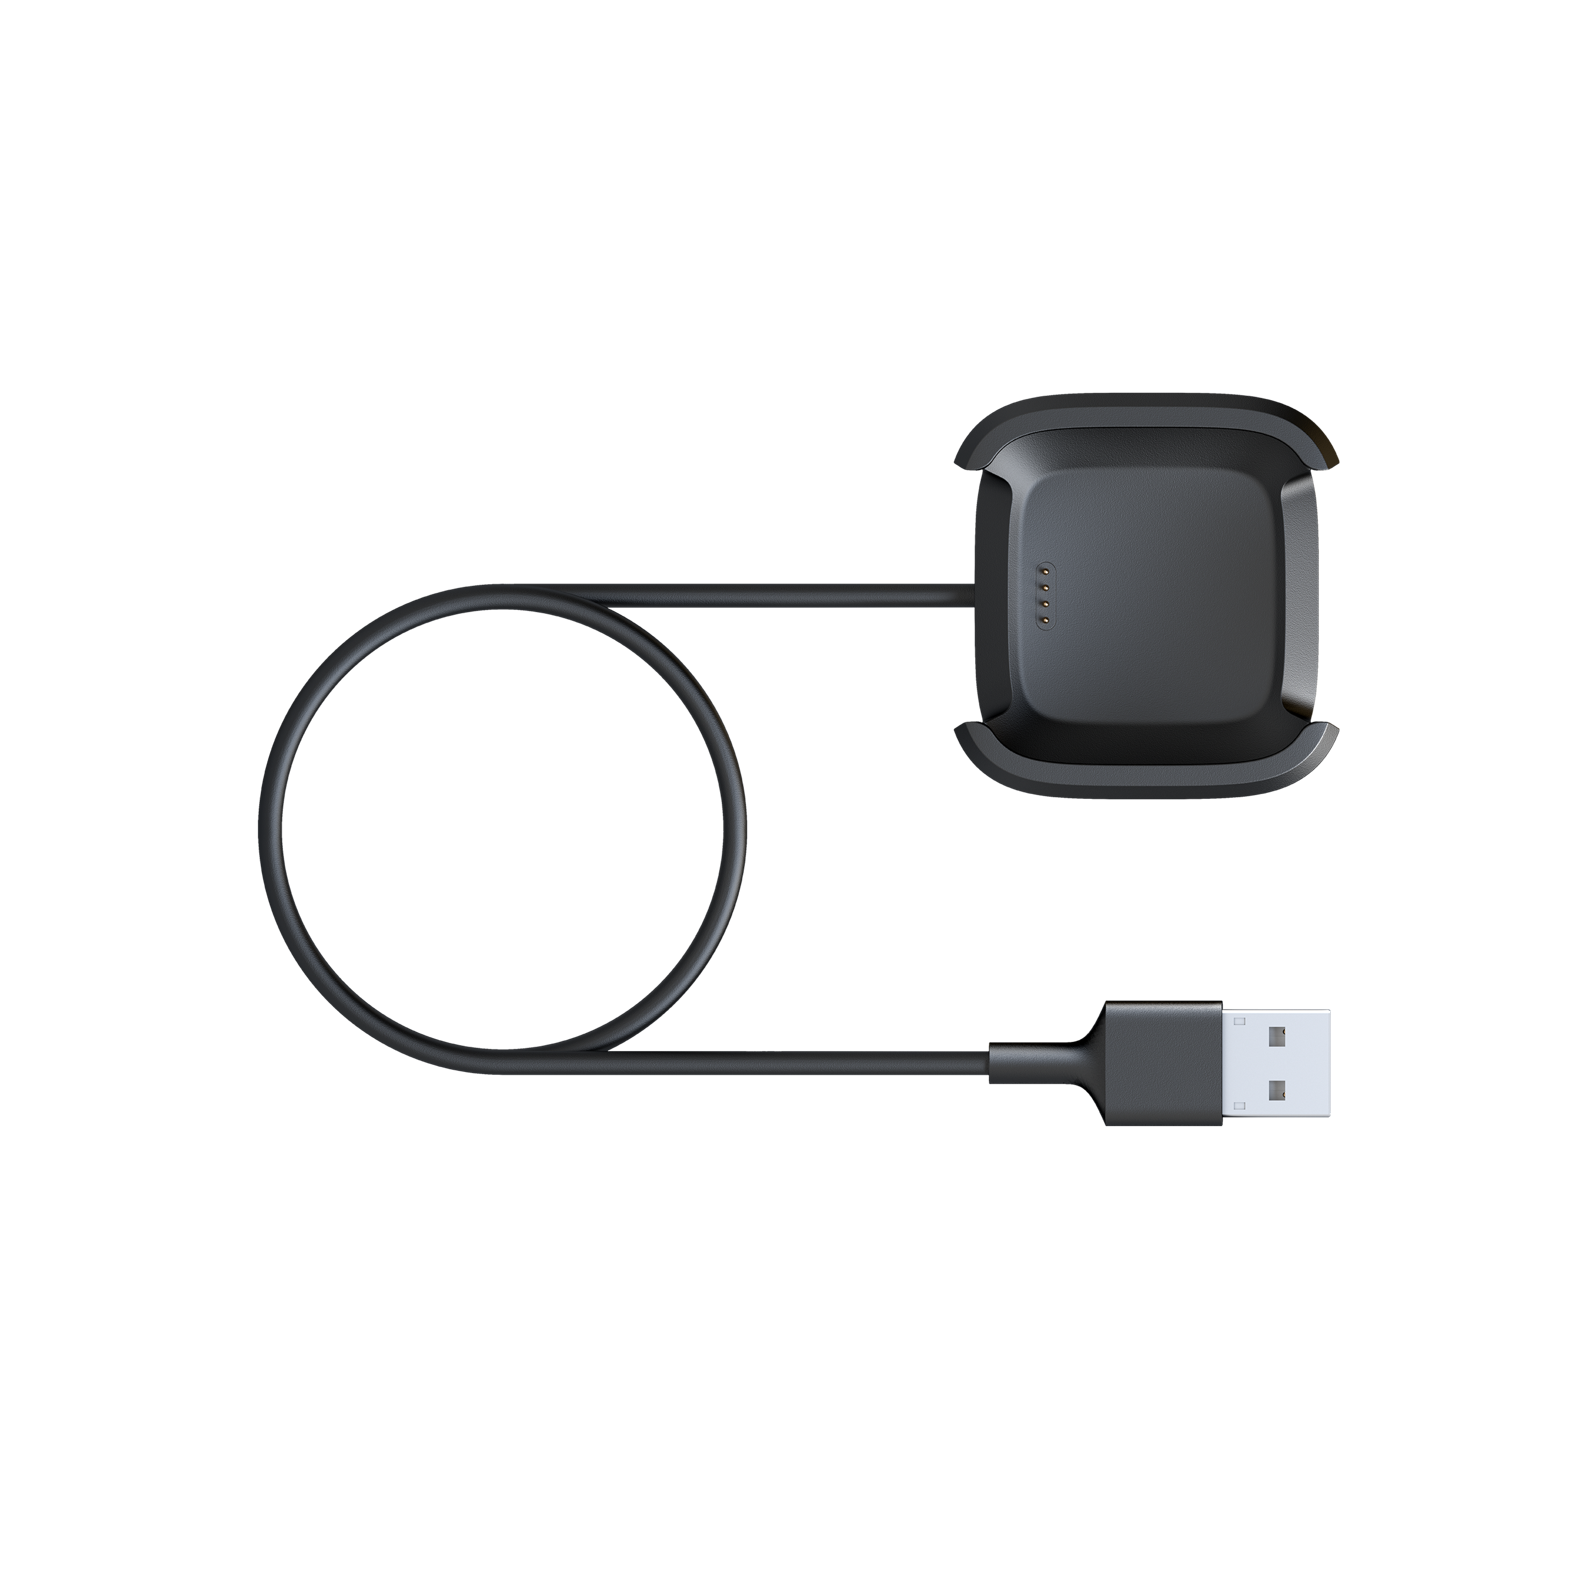 USB Ladekabel Lade Kabel Ladeadapter für Fitbit Versa/Lite Smartwatch Ladegerät 